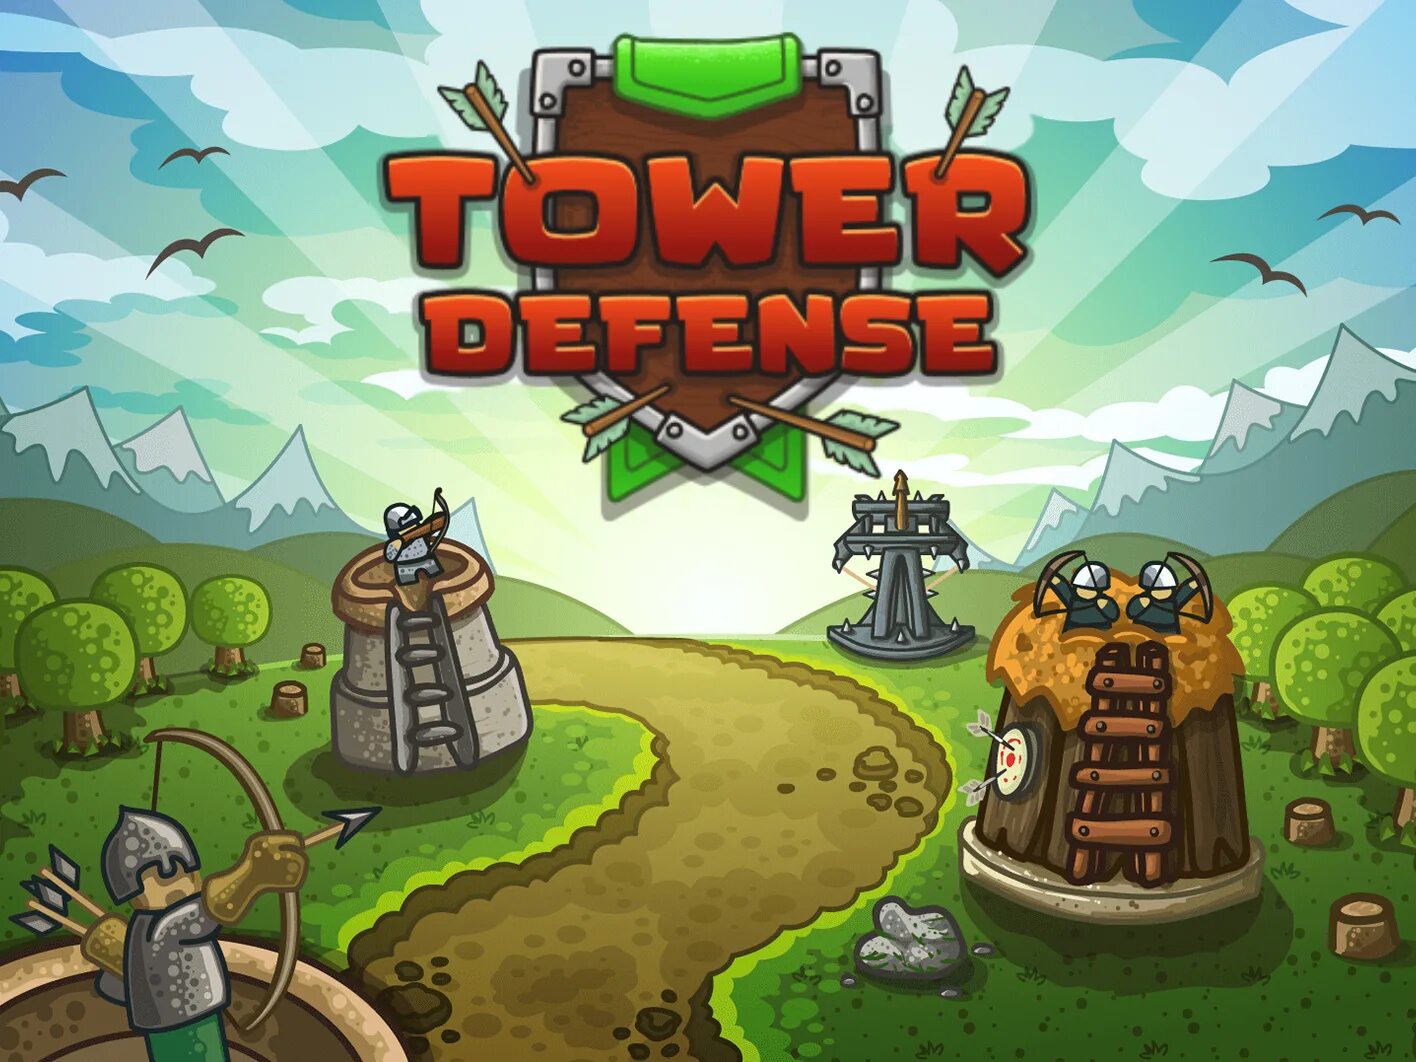 Игры защити замок. Tower Defense башни. Игра Tower Defense 1. Tower Defense башенки. Оборона башни / Tower Defense.